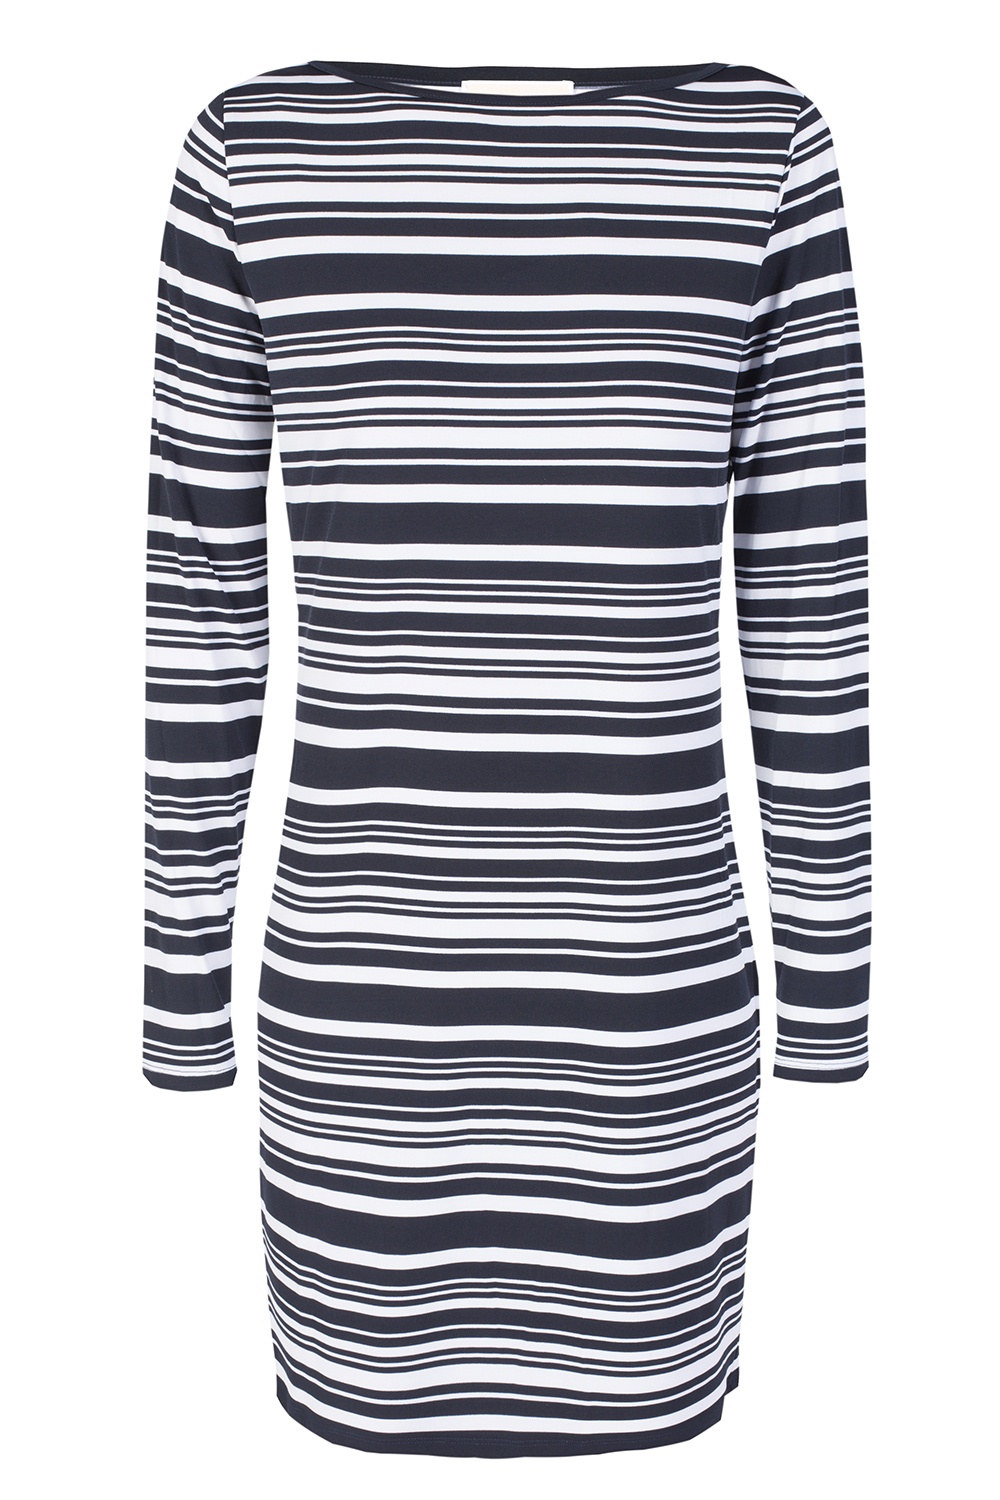 michael kors black and white striped dress